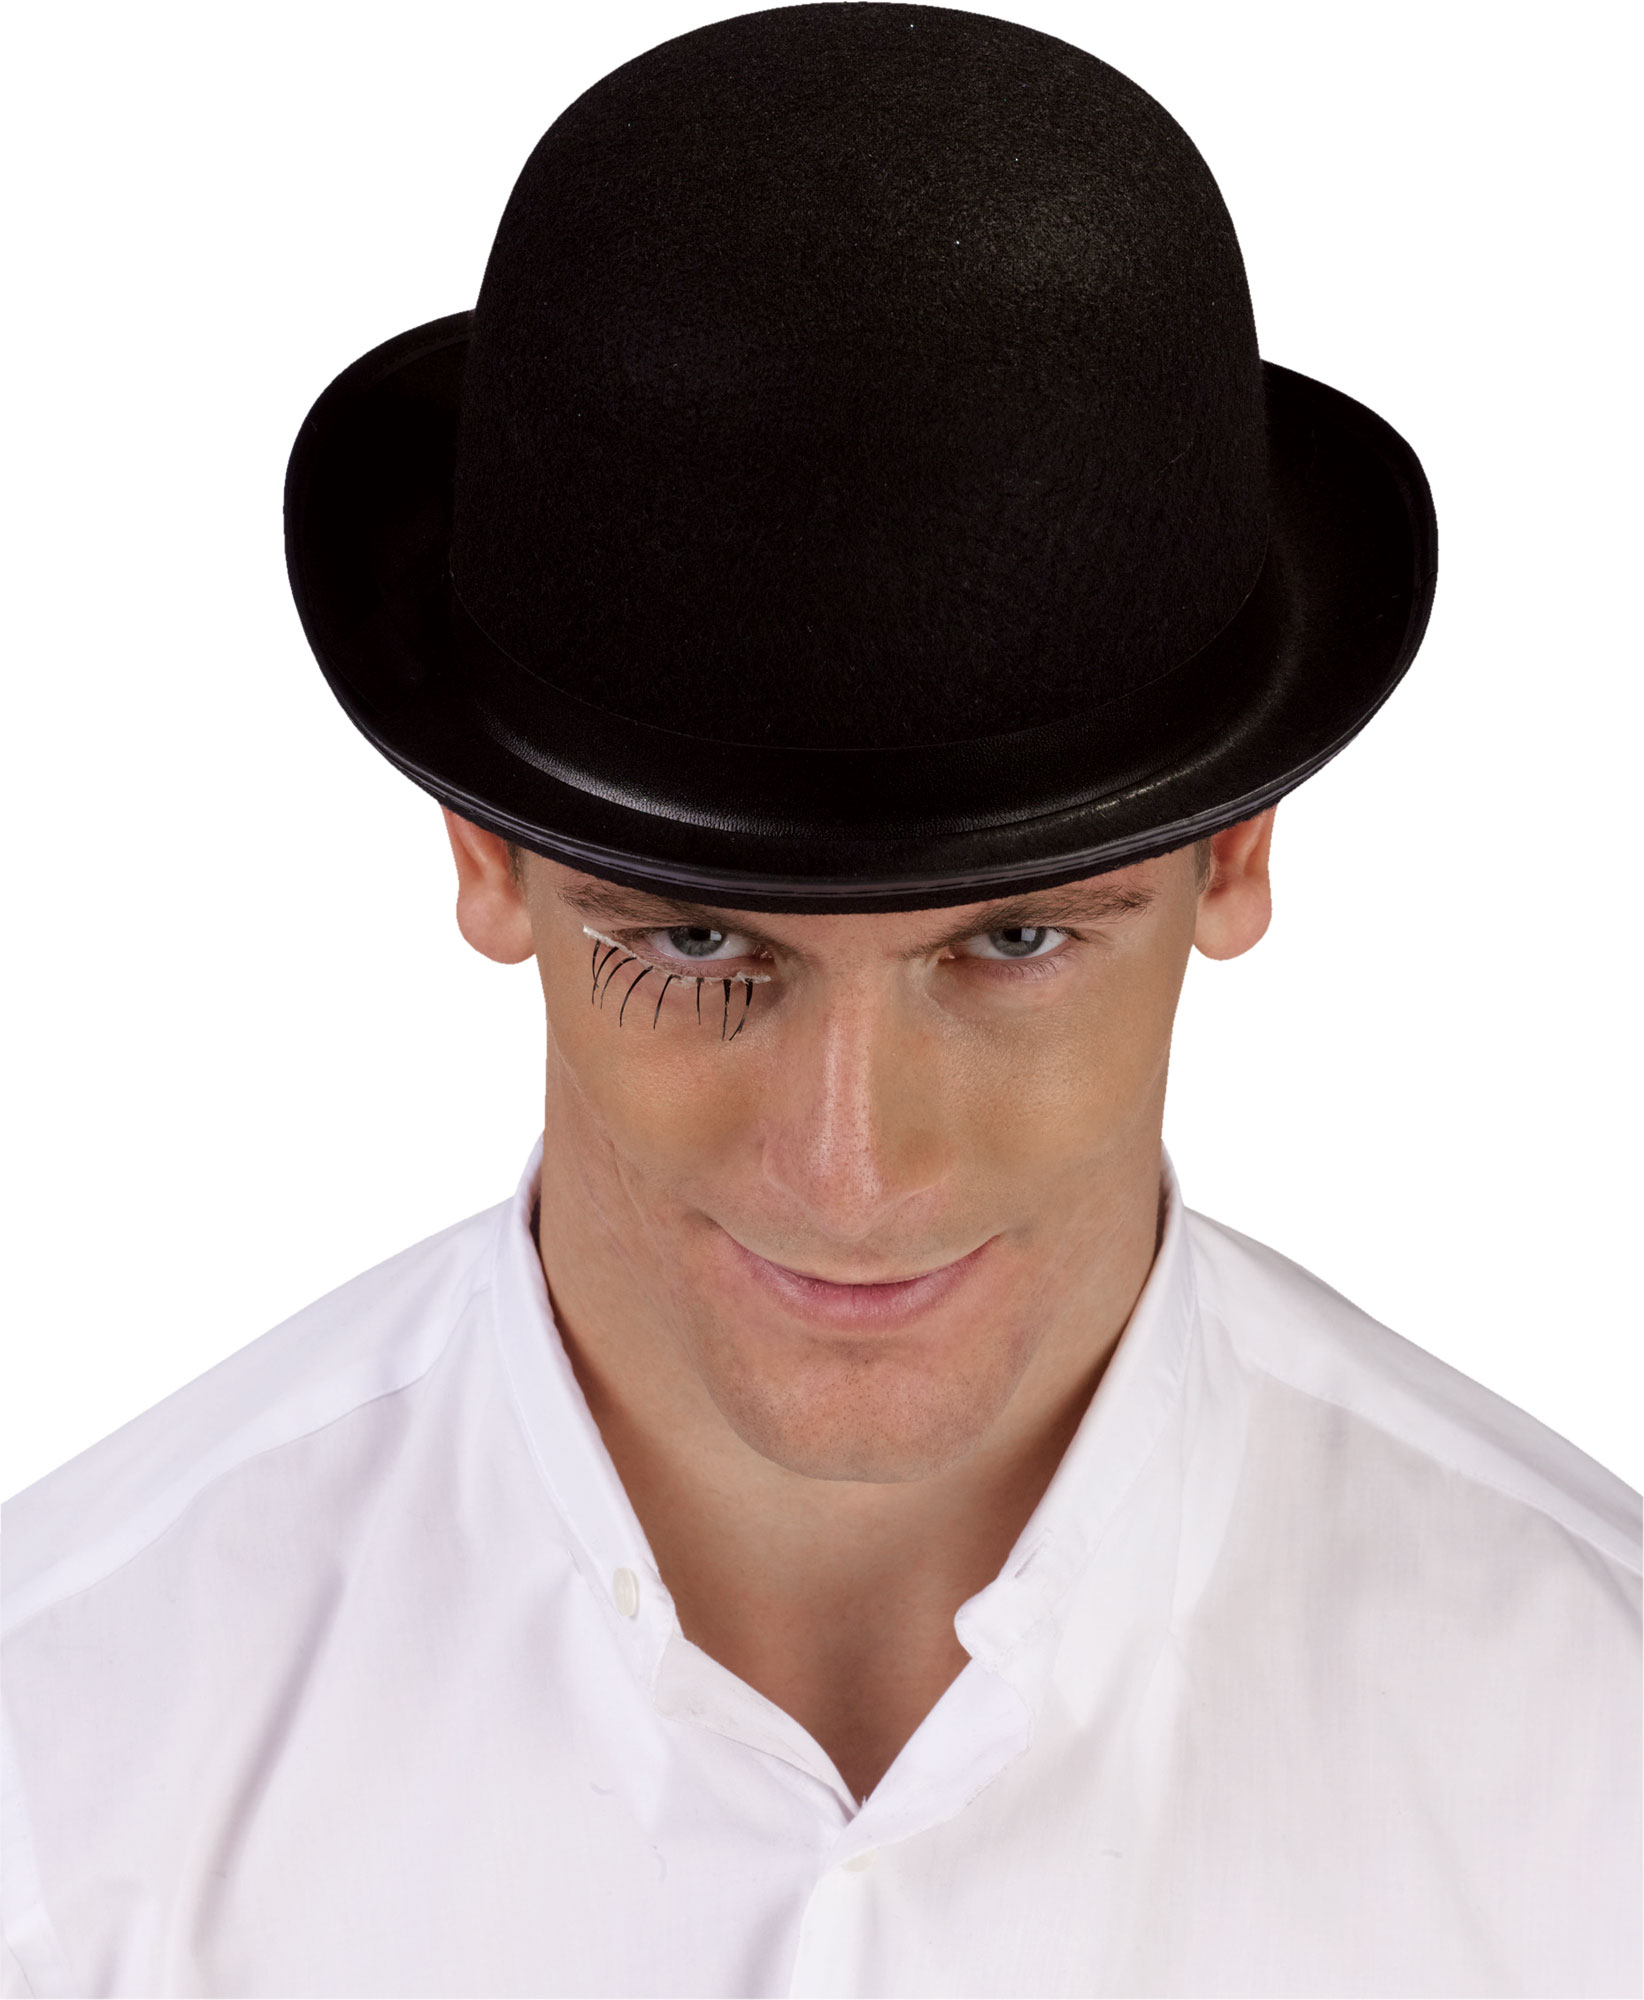 Муж шляпа. Шляпа мужская. Головной убор шляпа мужская. Мужчина в шляпе. Модные мужские шляпы.